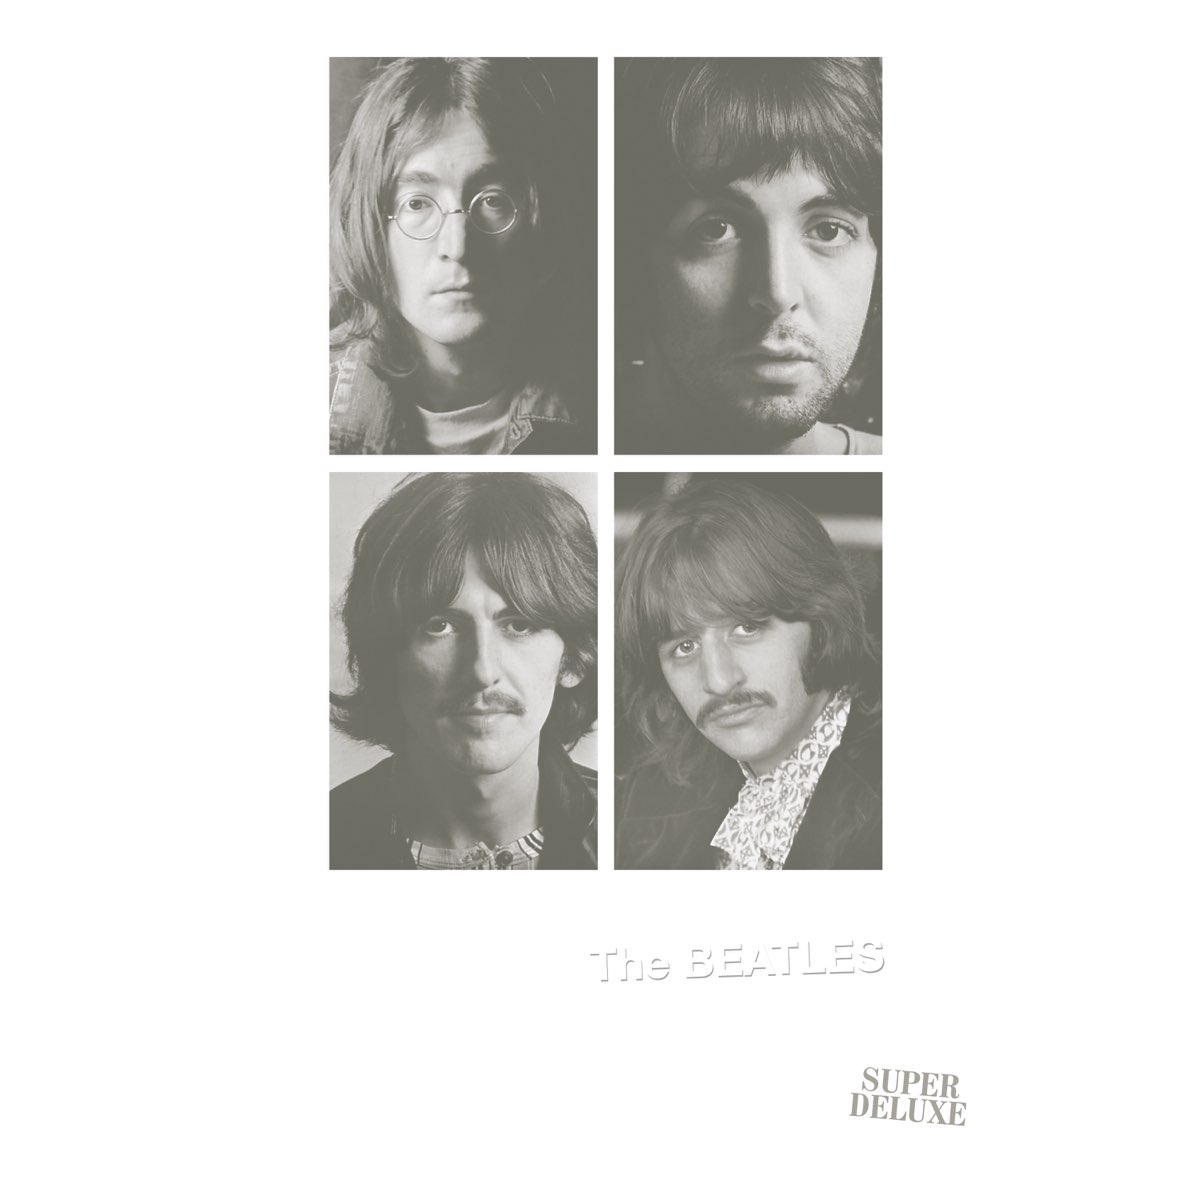 The Beatles (White Album) (Super Deluxe Edition) [2018 Remix